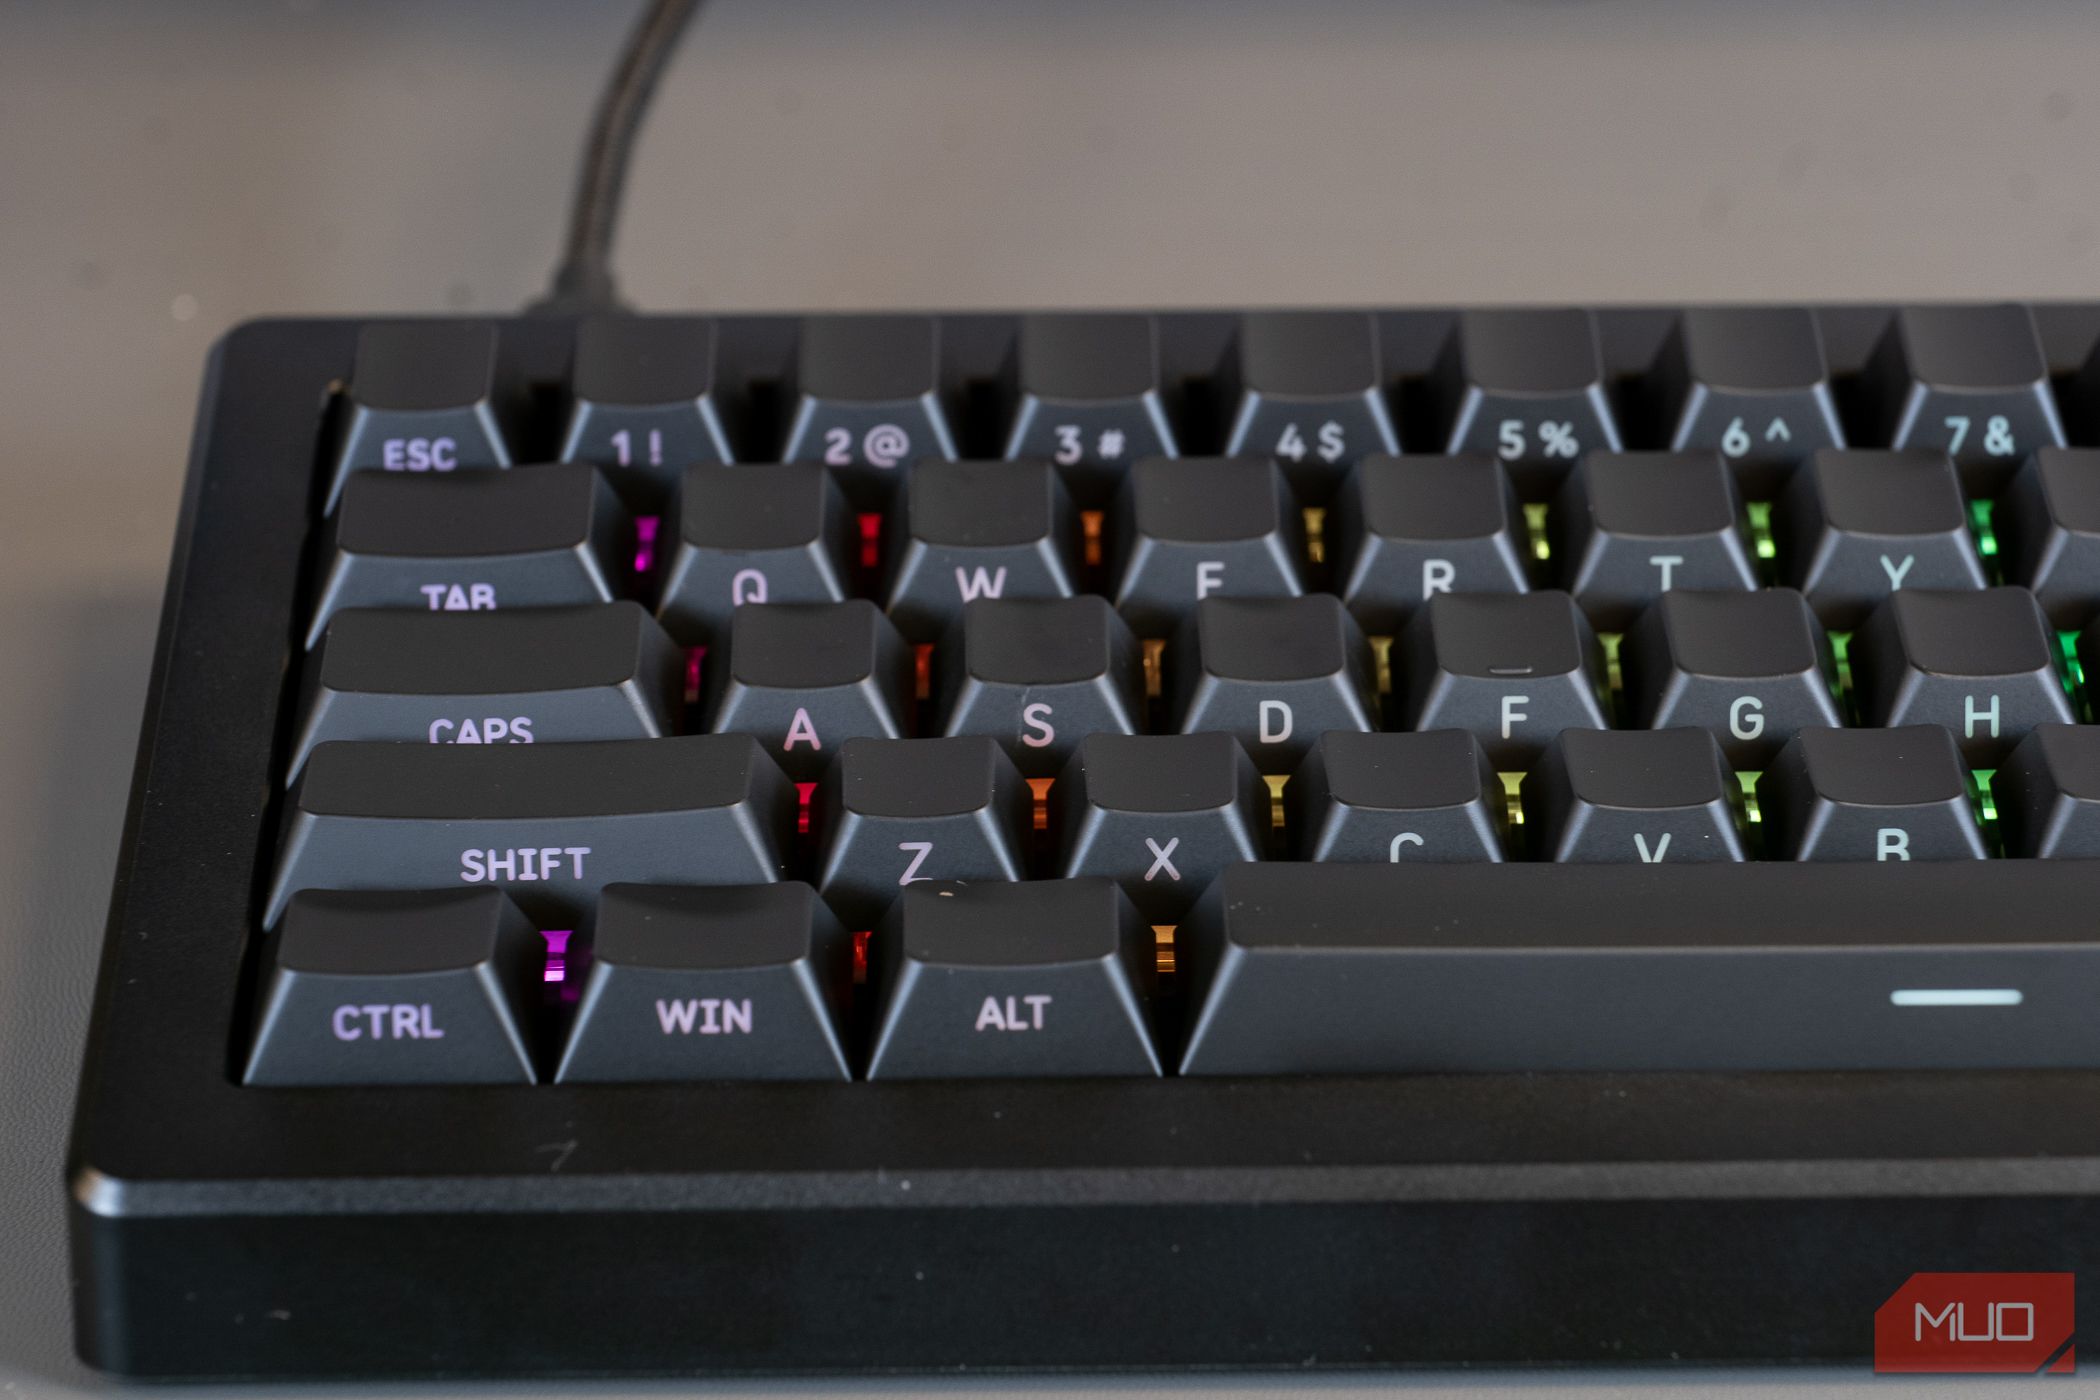 The keyboard backlit showing front facing key markings